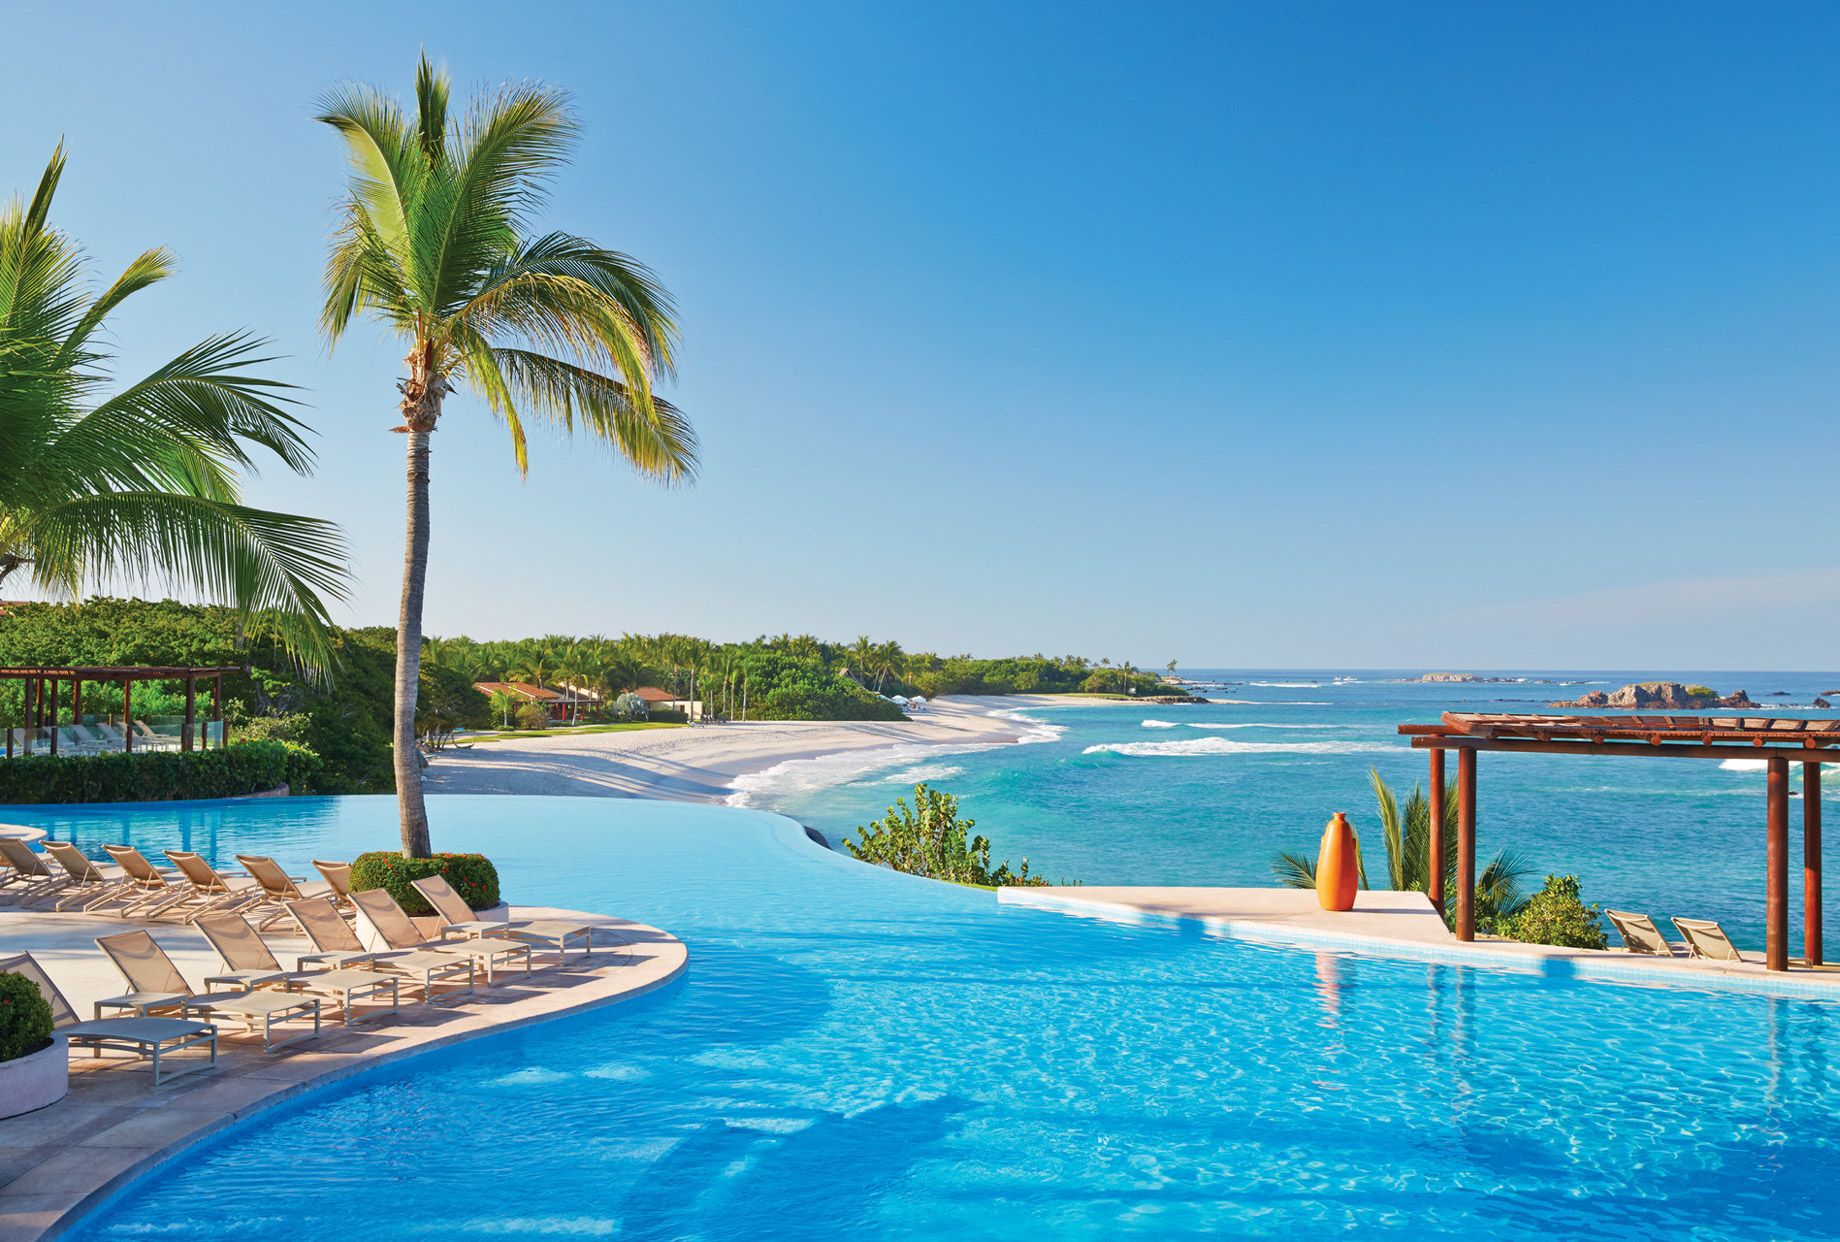 Four Seasons Resort Punta Mita - Nayarit, Mexico - Resort Infinity Pool and Beach View